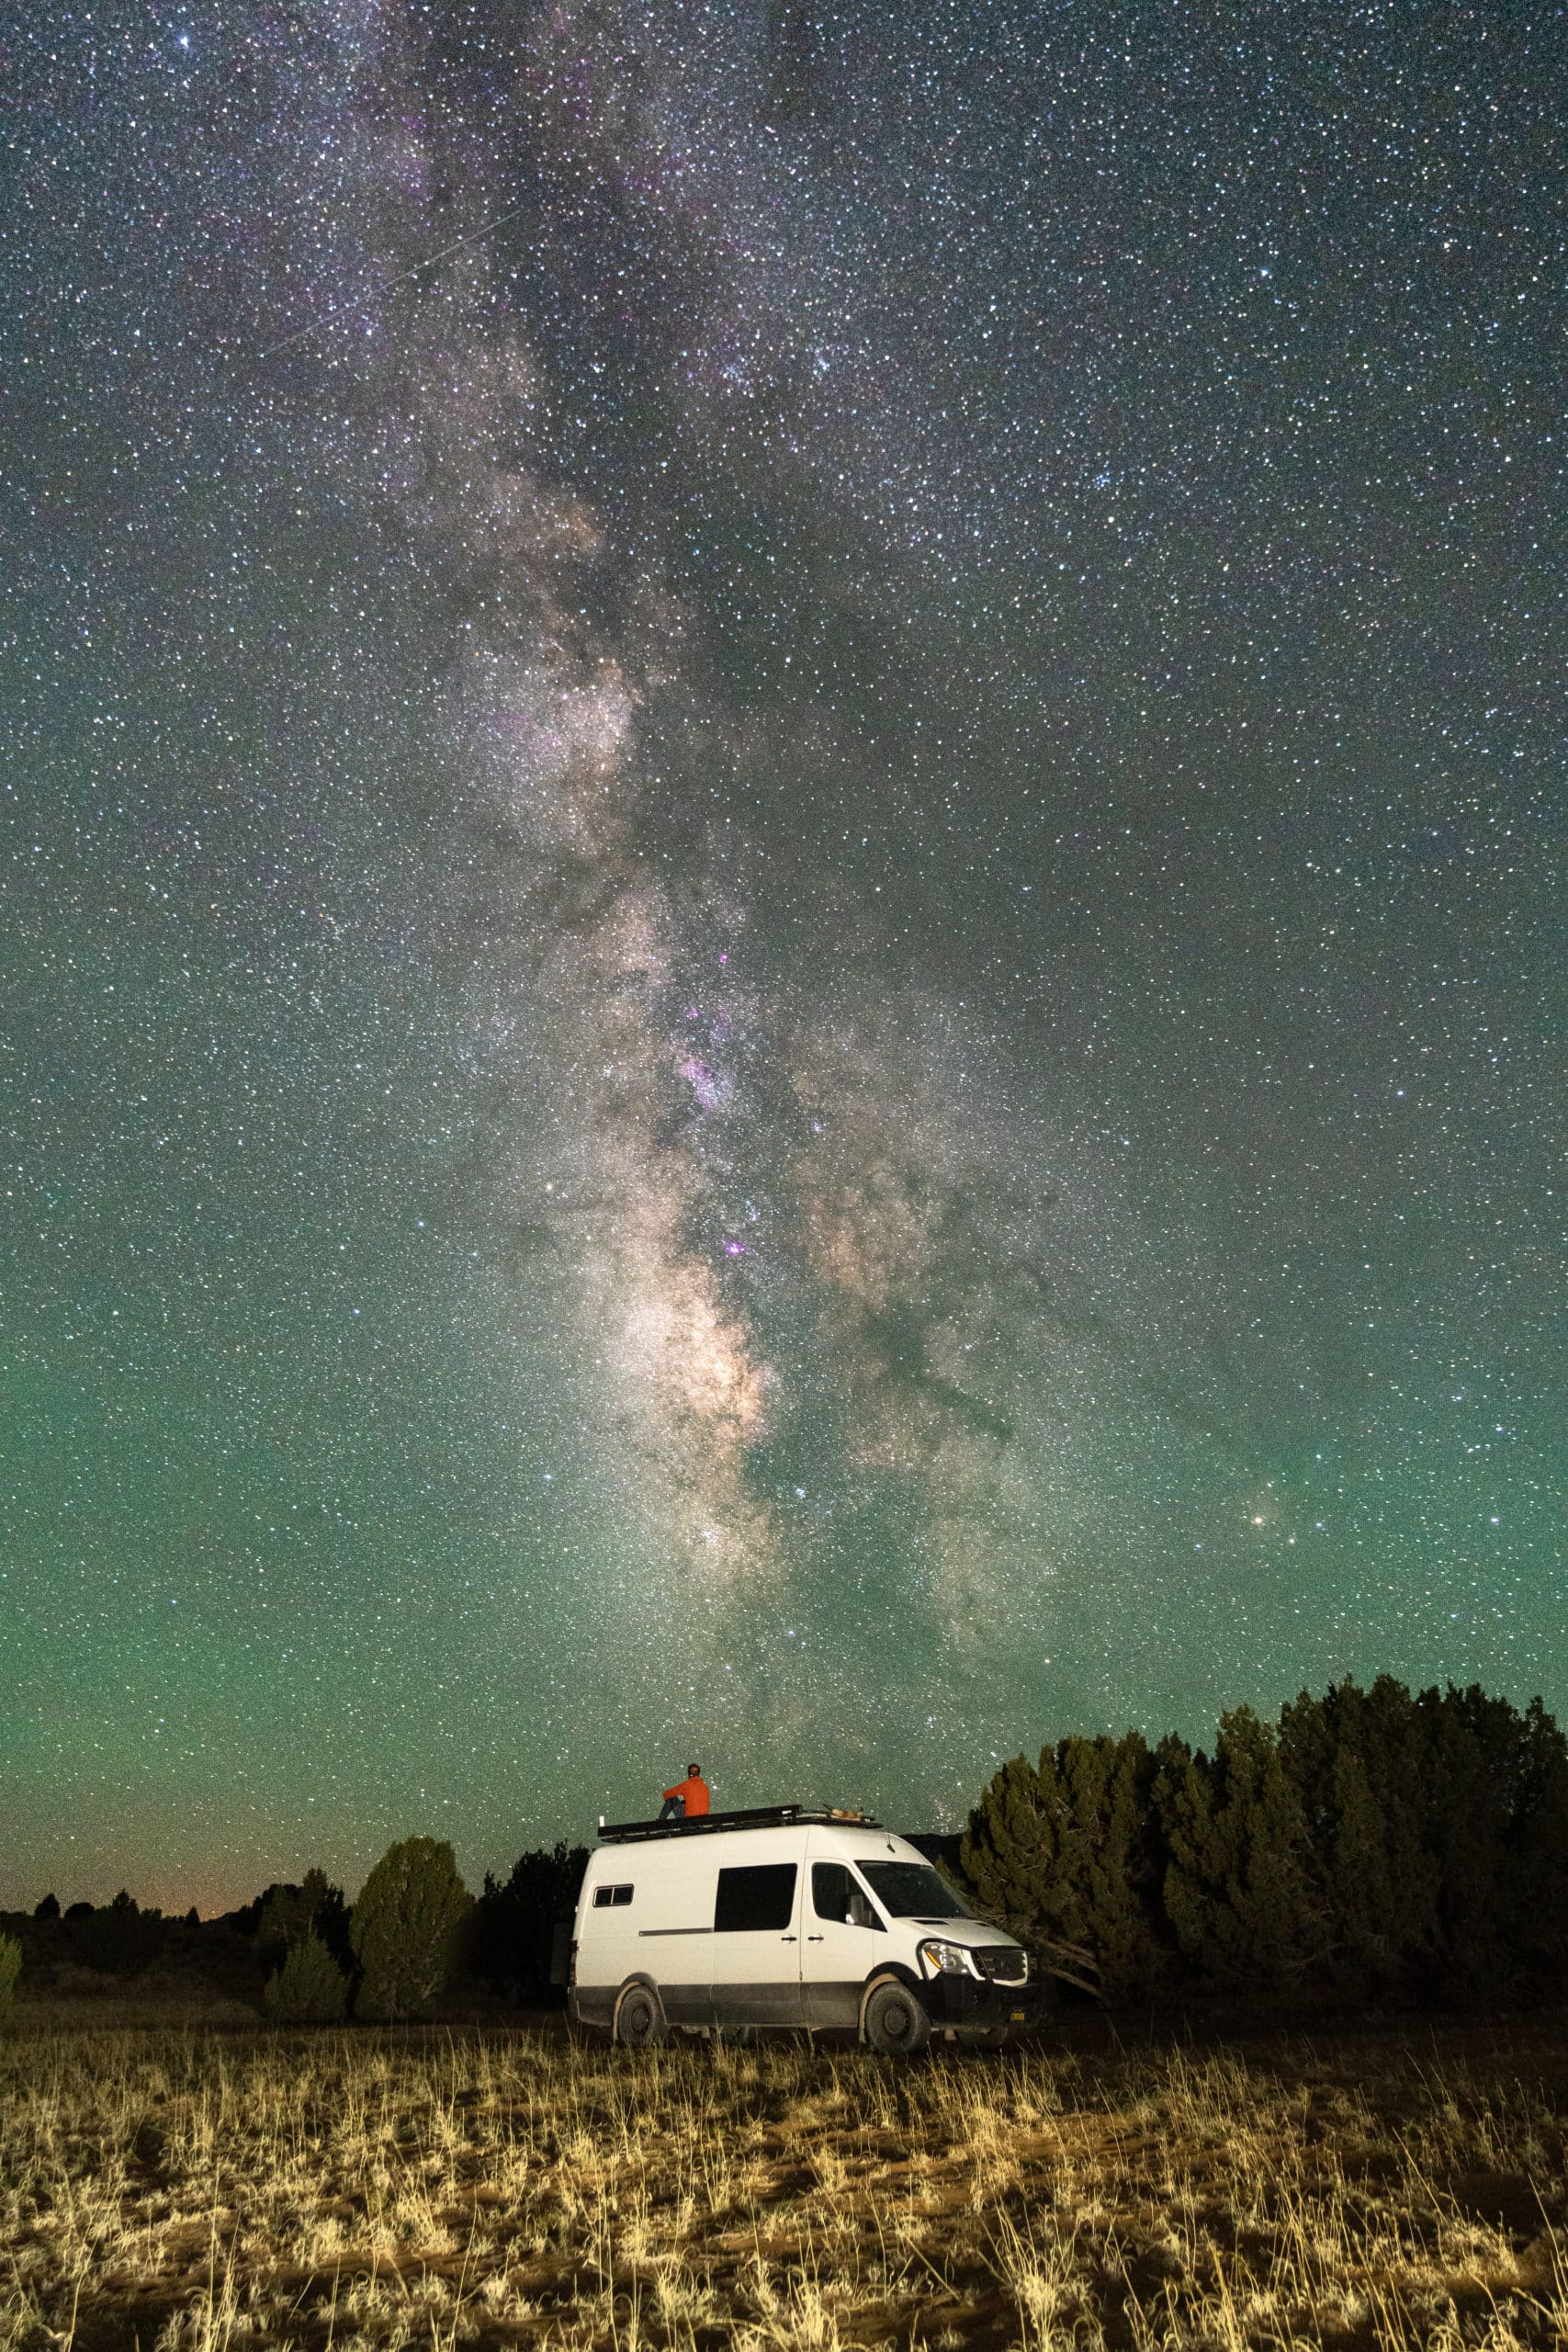 Desert Cruisers in Their Van Under the Milky Way